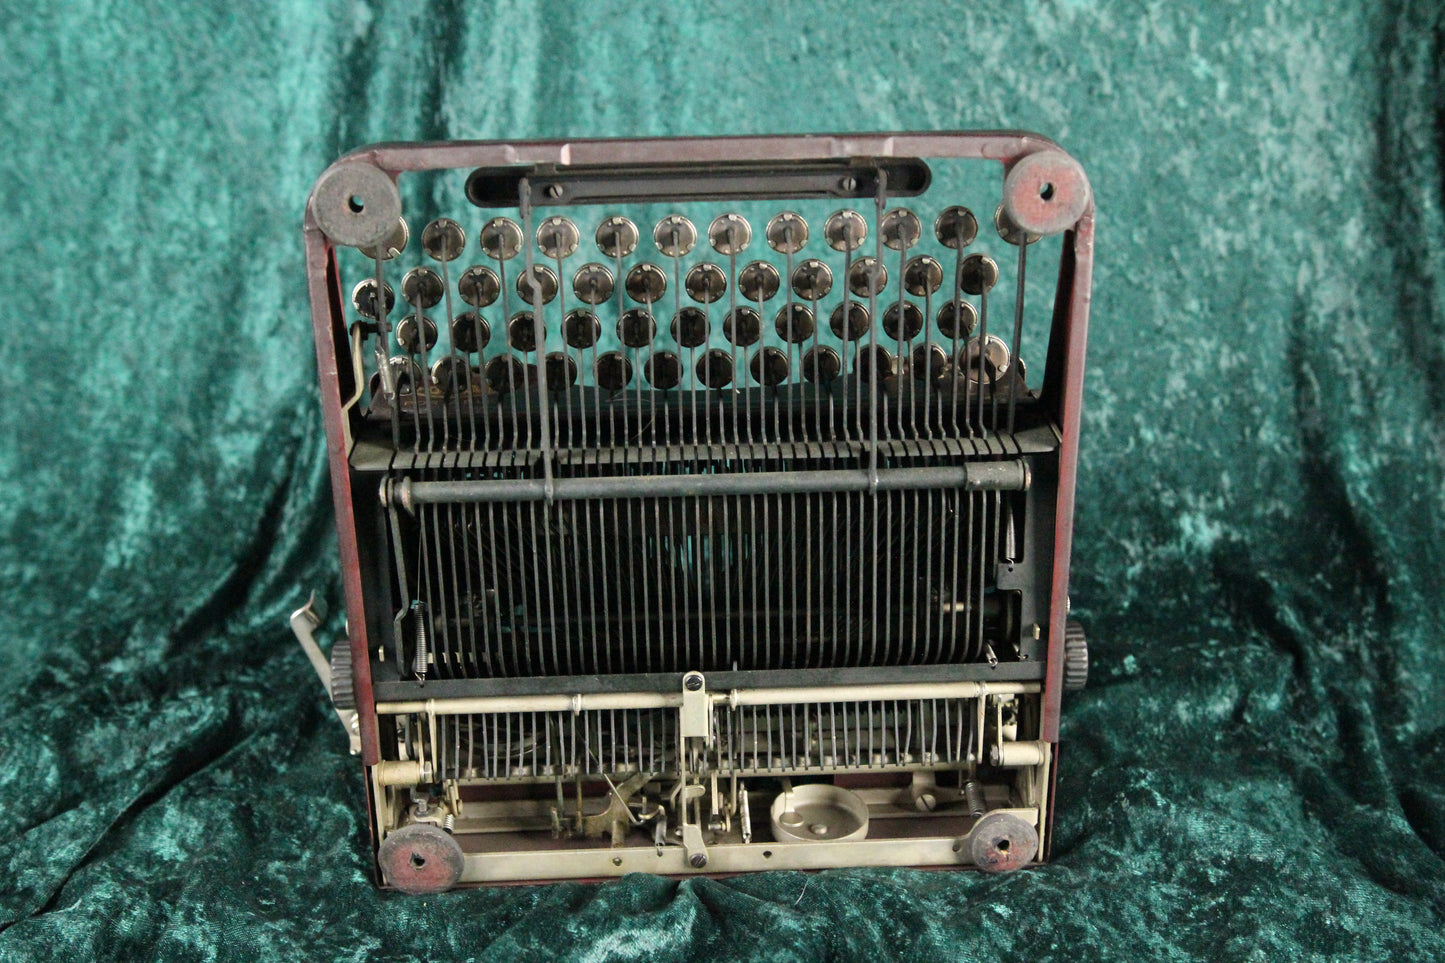 Royal Portable Model P Manual Typewriter, Alligator Burgundy/Maroon Color, 1927